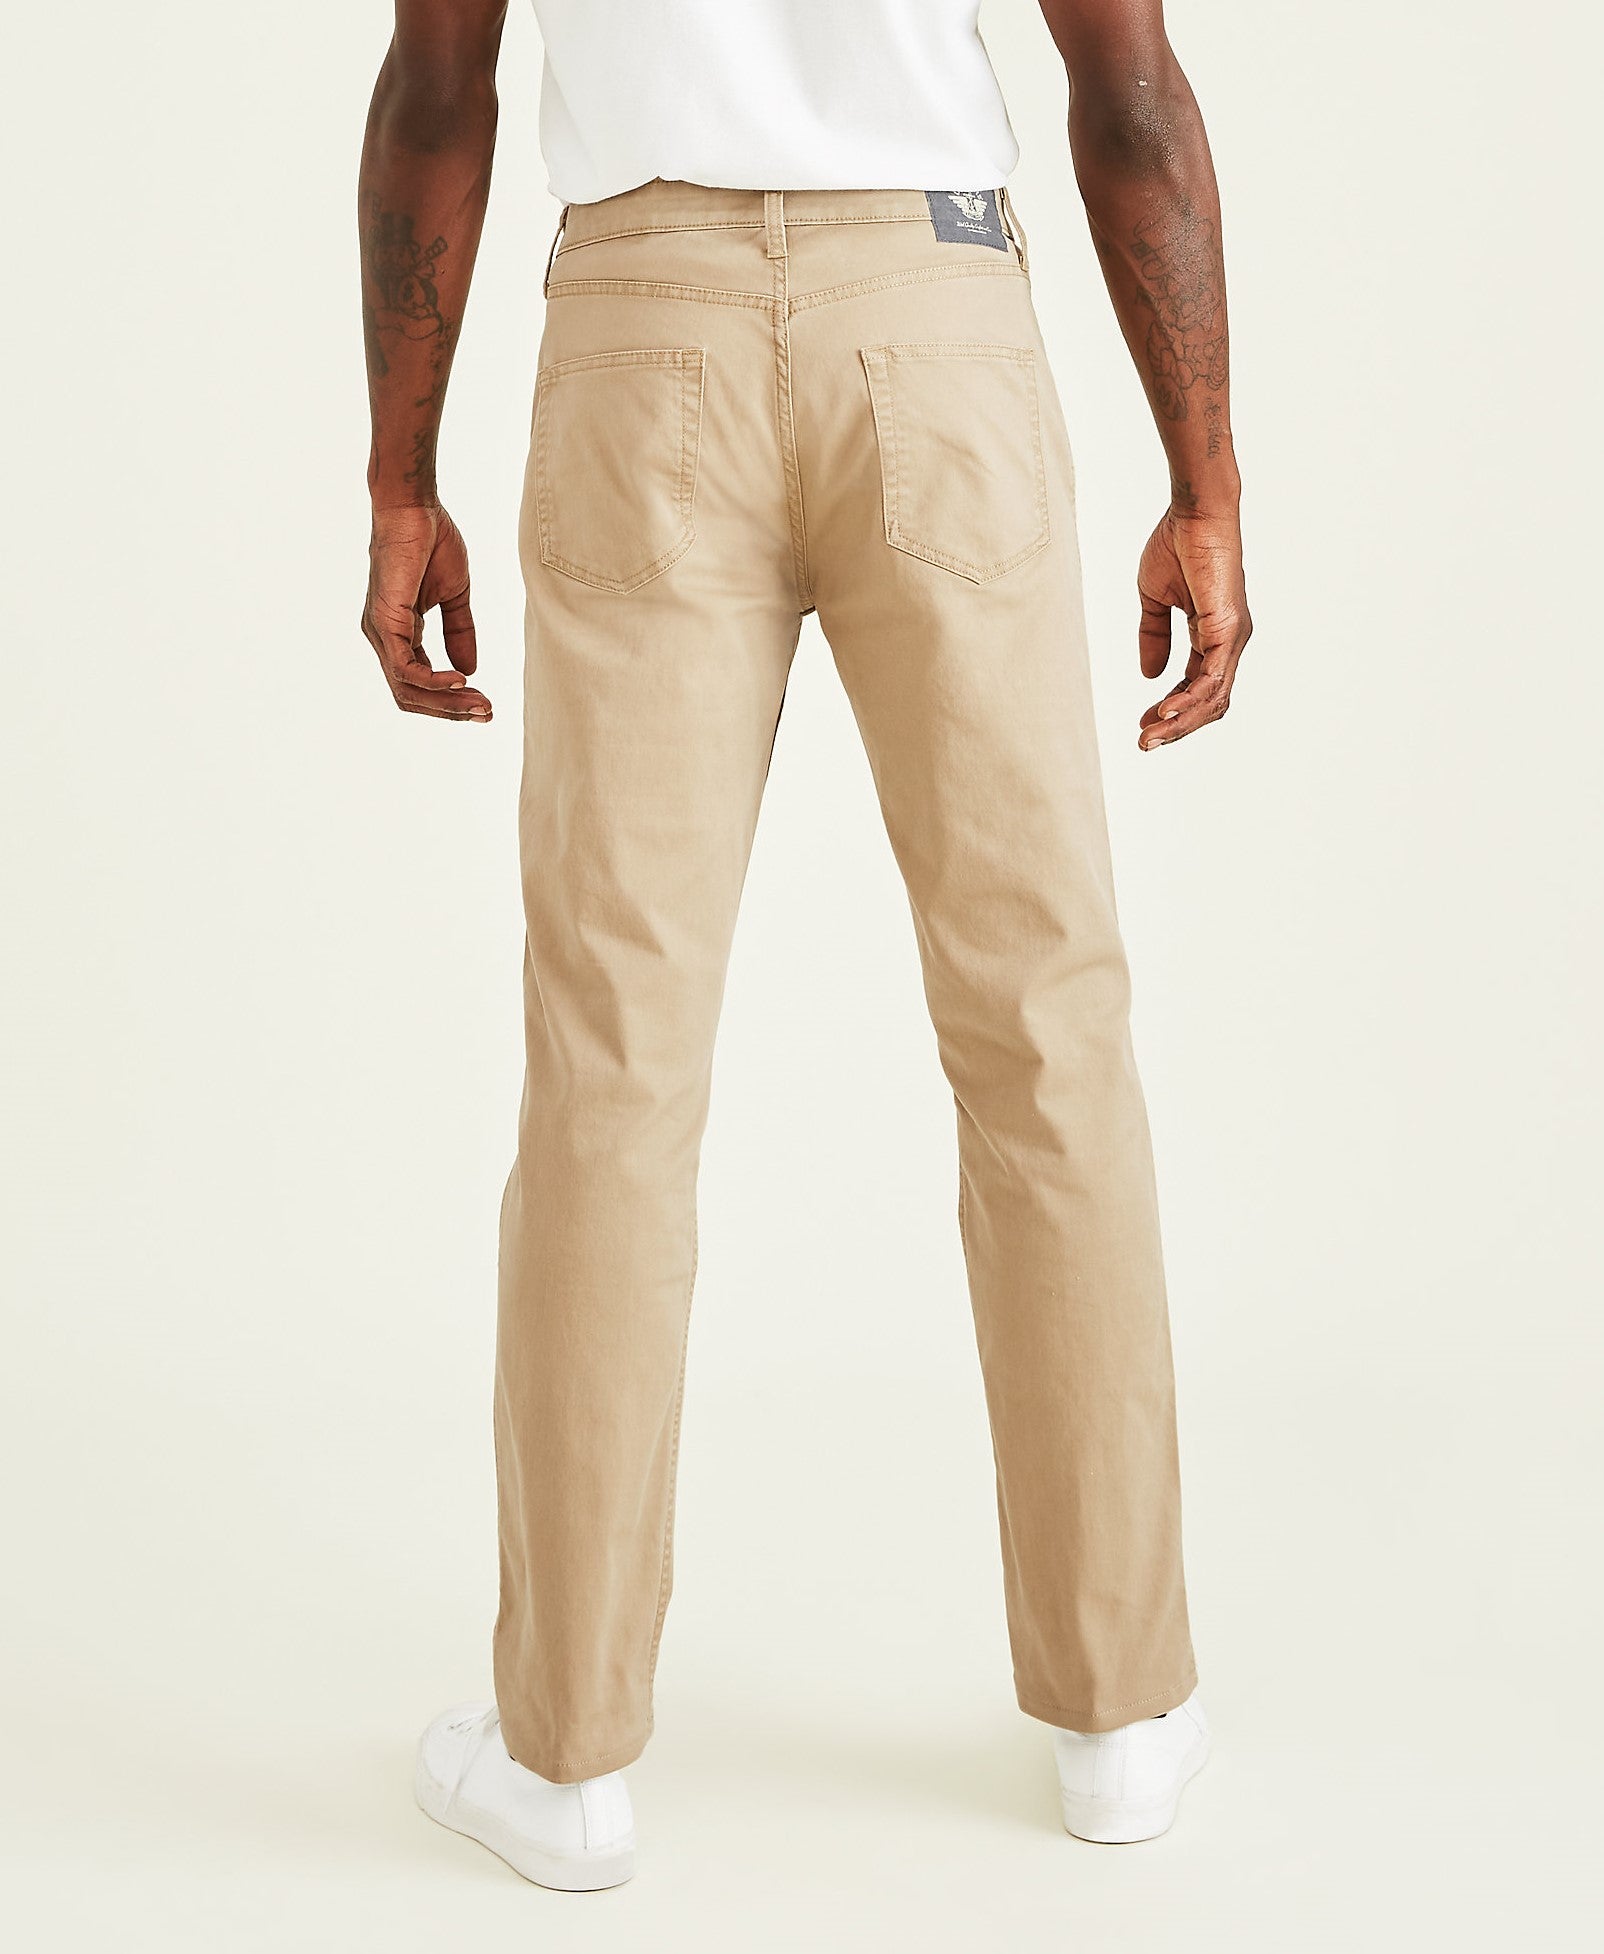 pantalones-jeans-dockers-jean-cut-p-caballeros-3